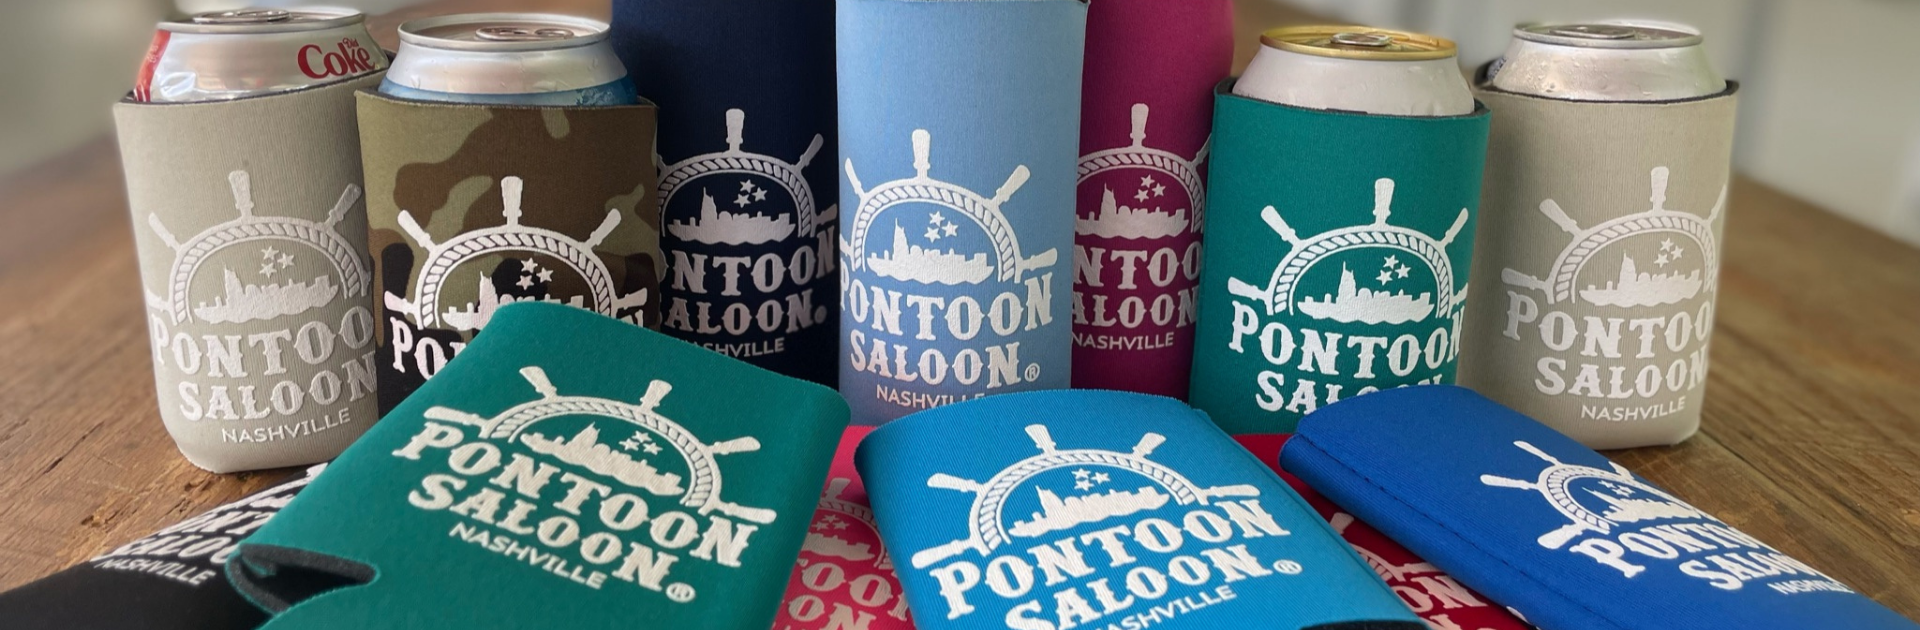 pontoon saloon koozies in different colors